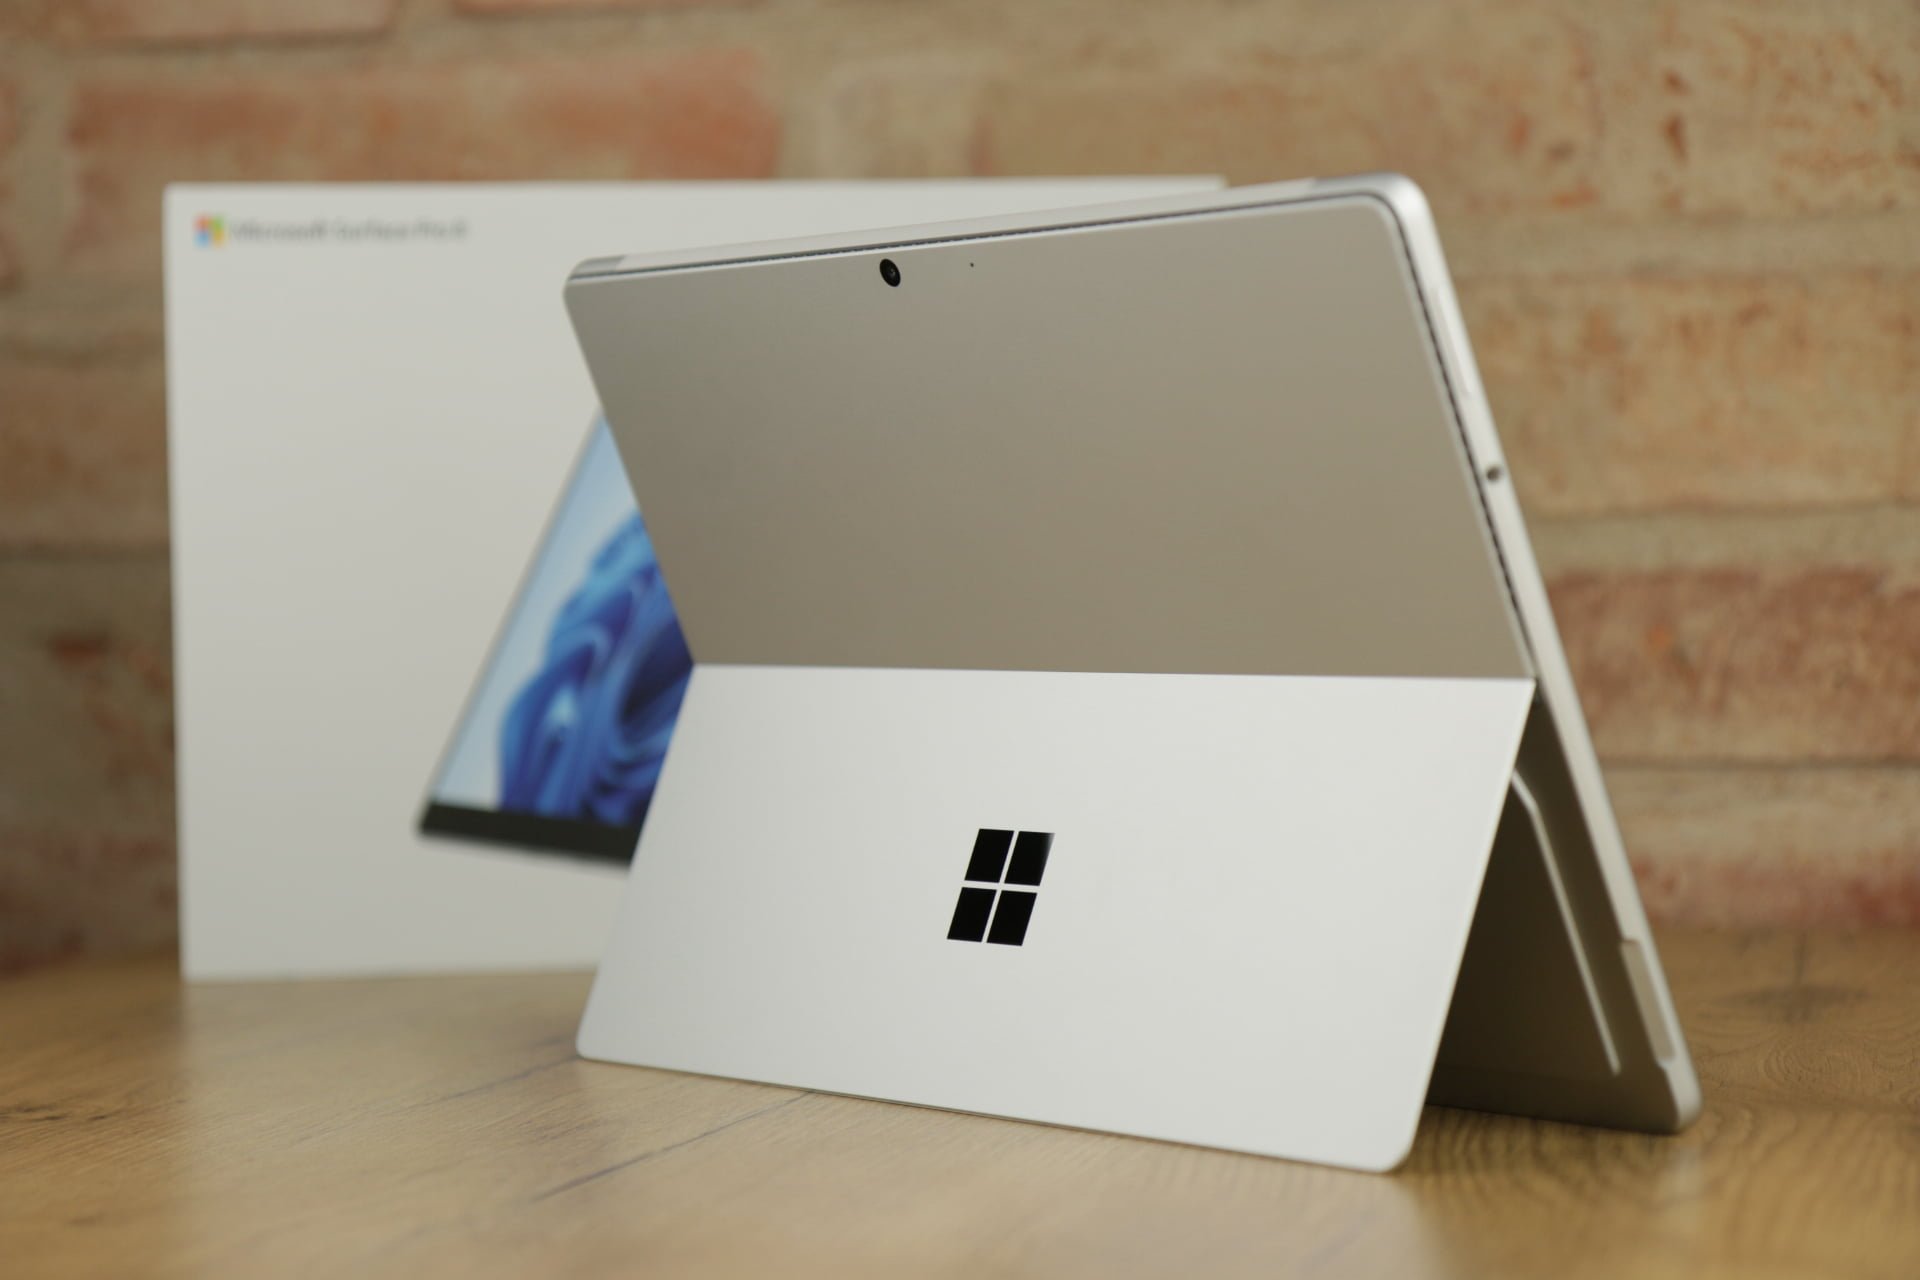 Microsoft Surface Pro 8 recenzja test opinia